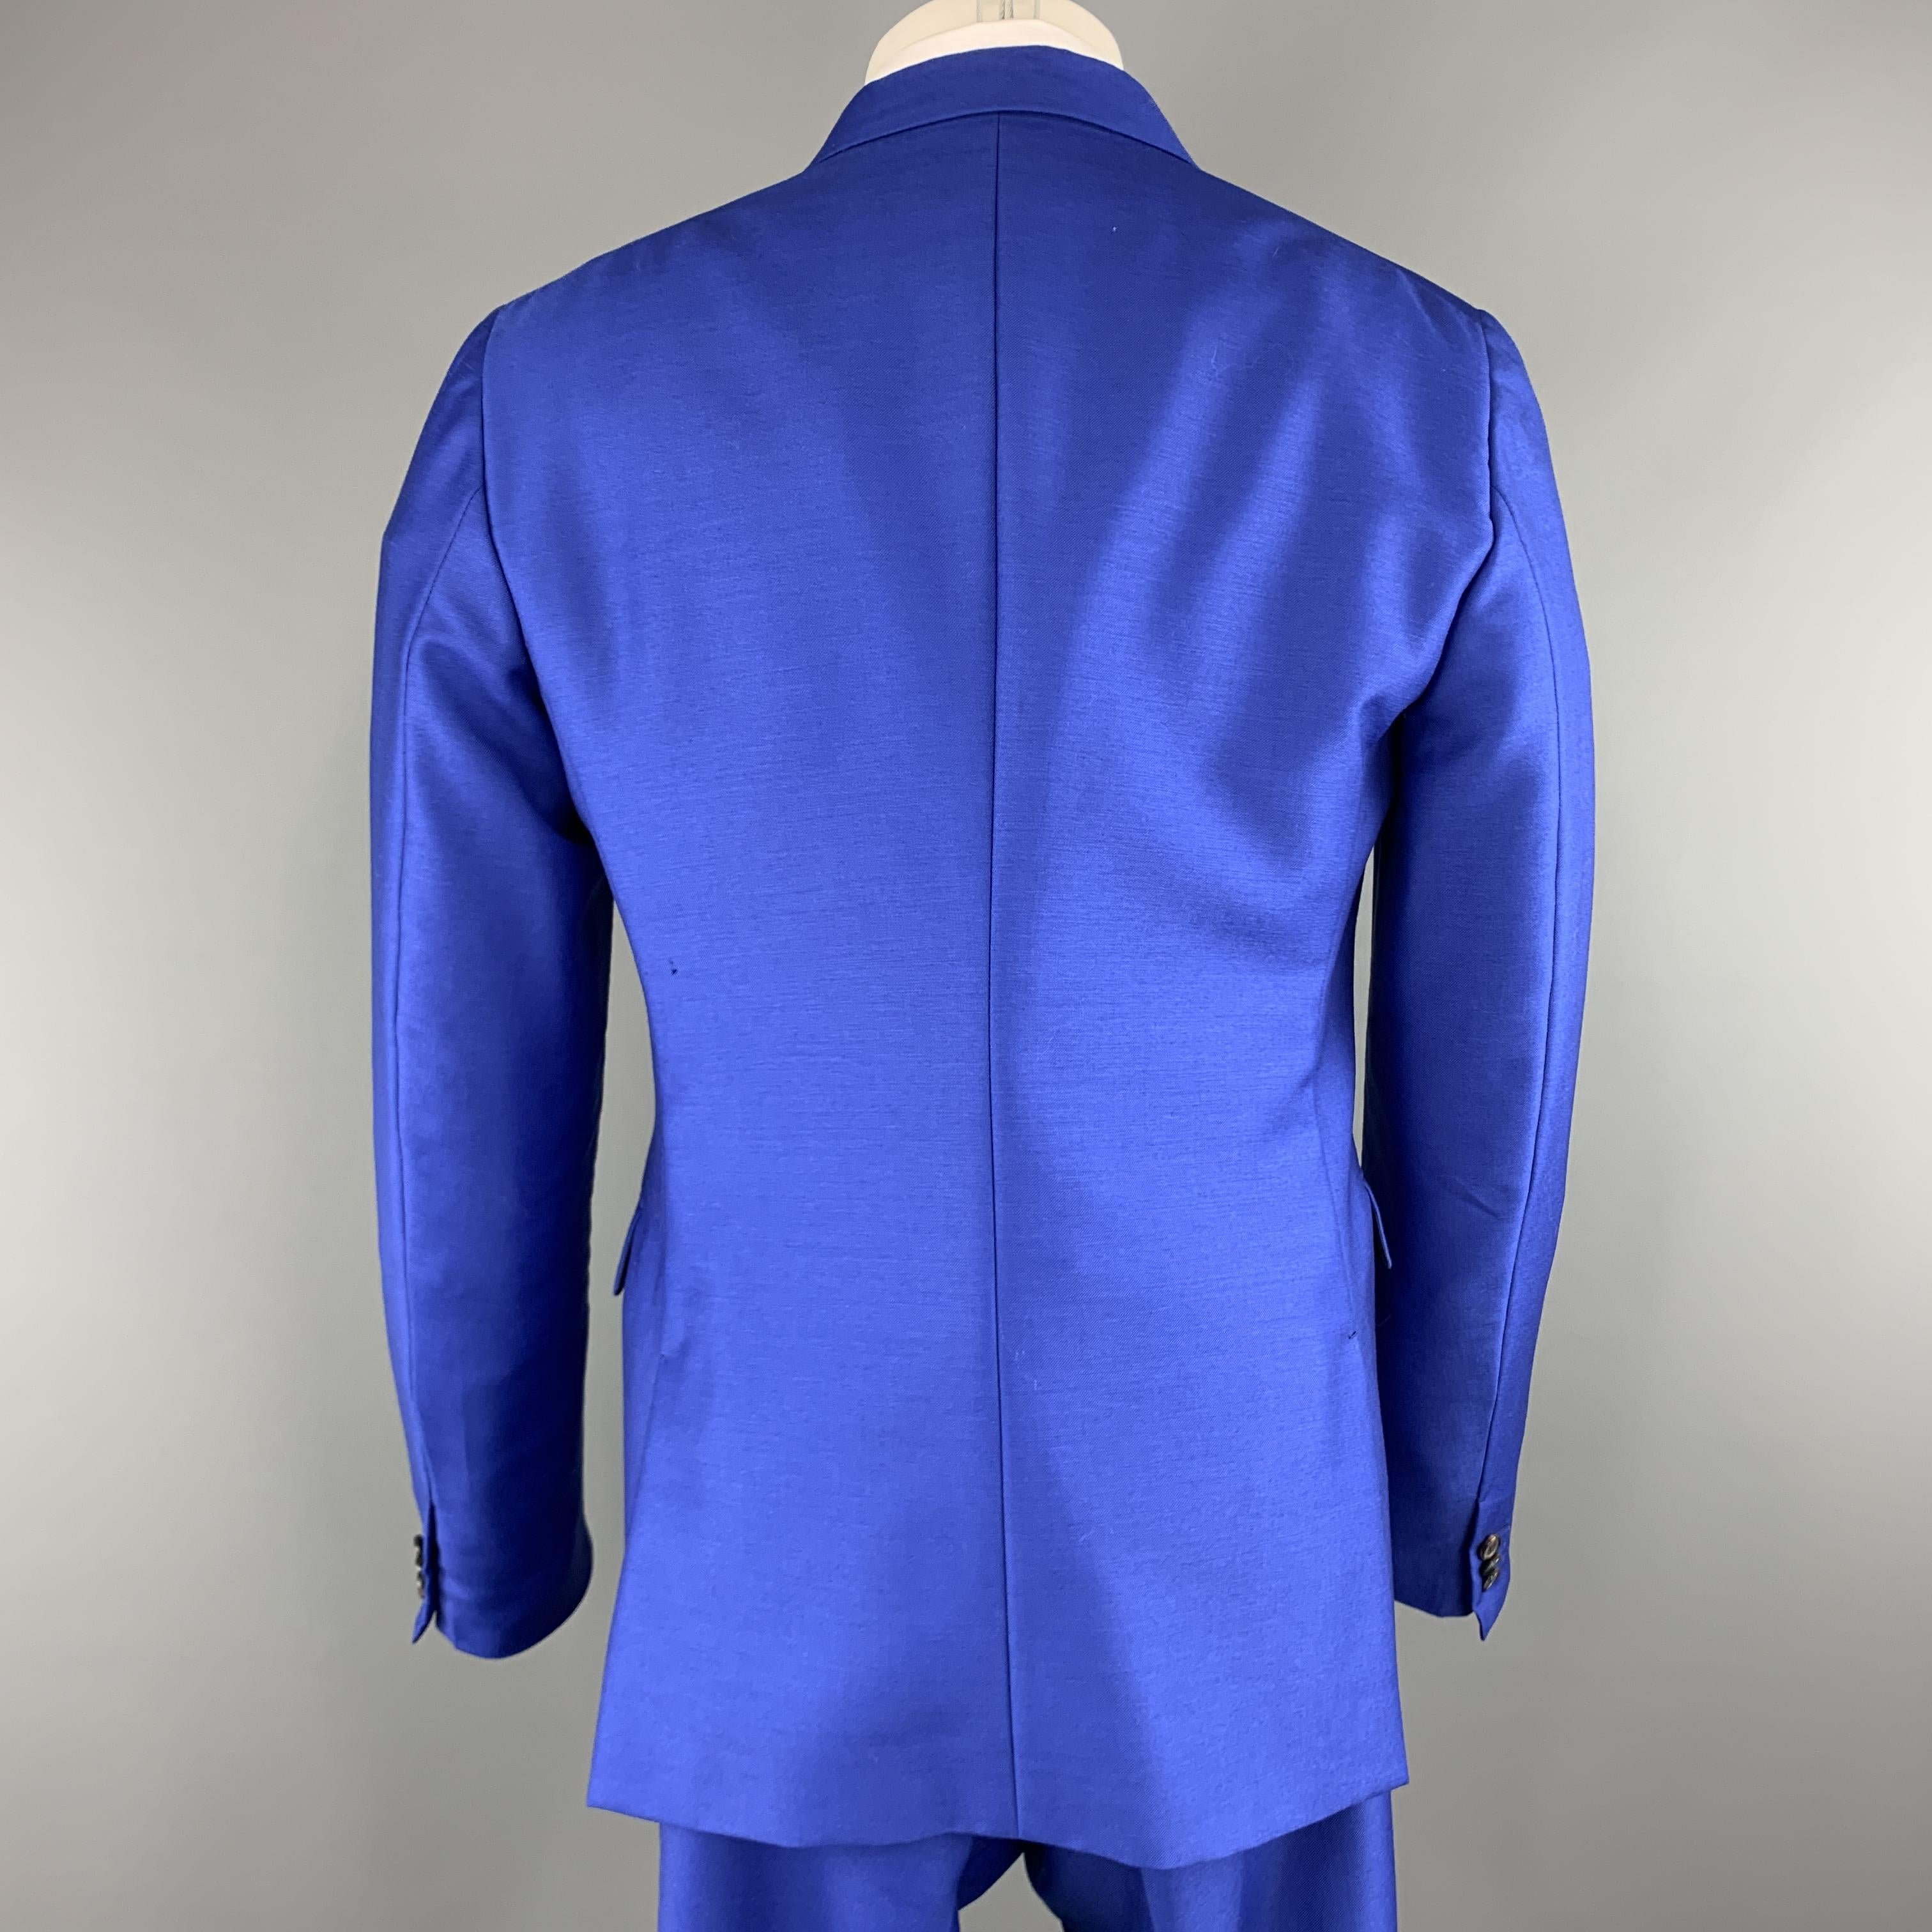 Men's JIL SANDER 42 Royal Blue Solid Wool / Mohair Double Breasted Peak Lapel Suit